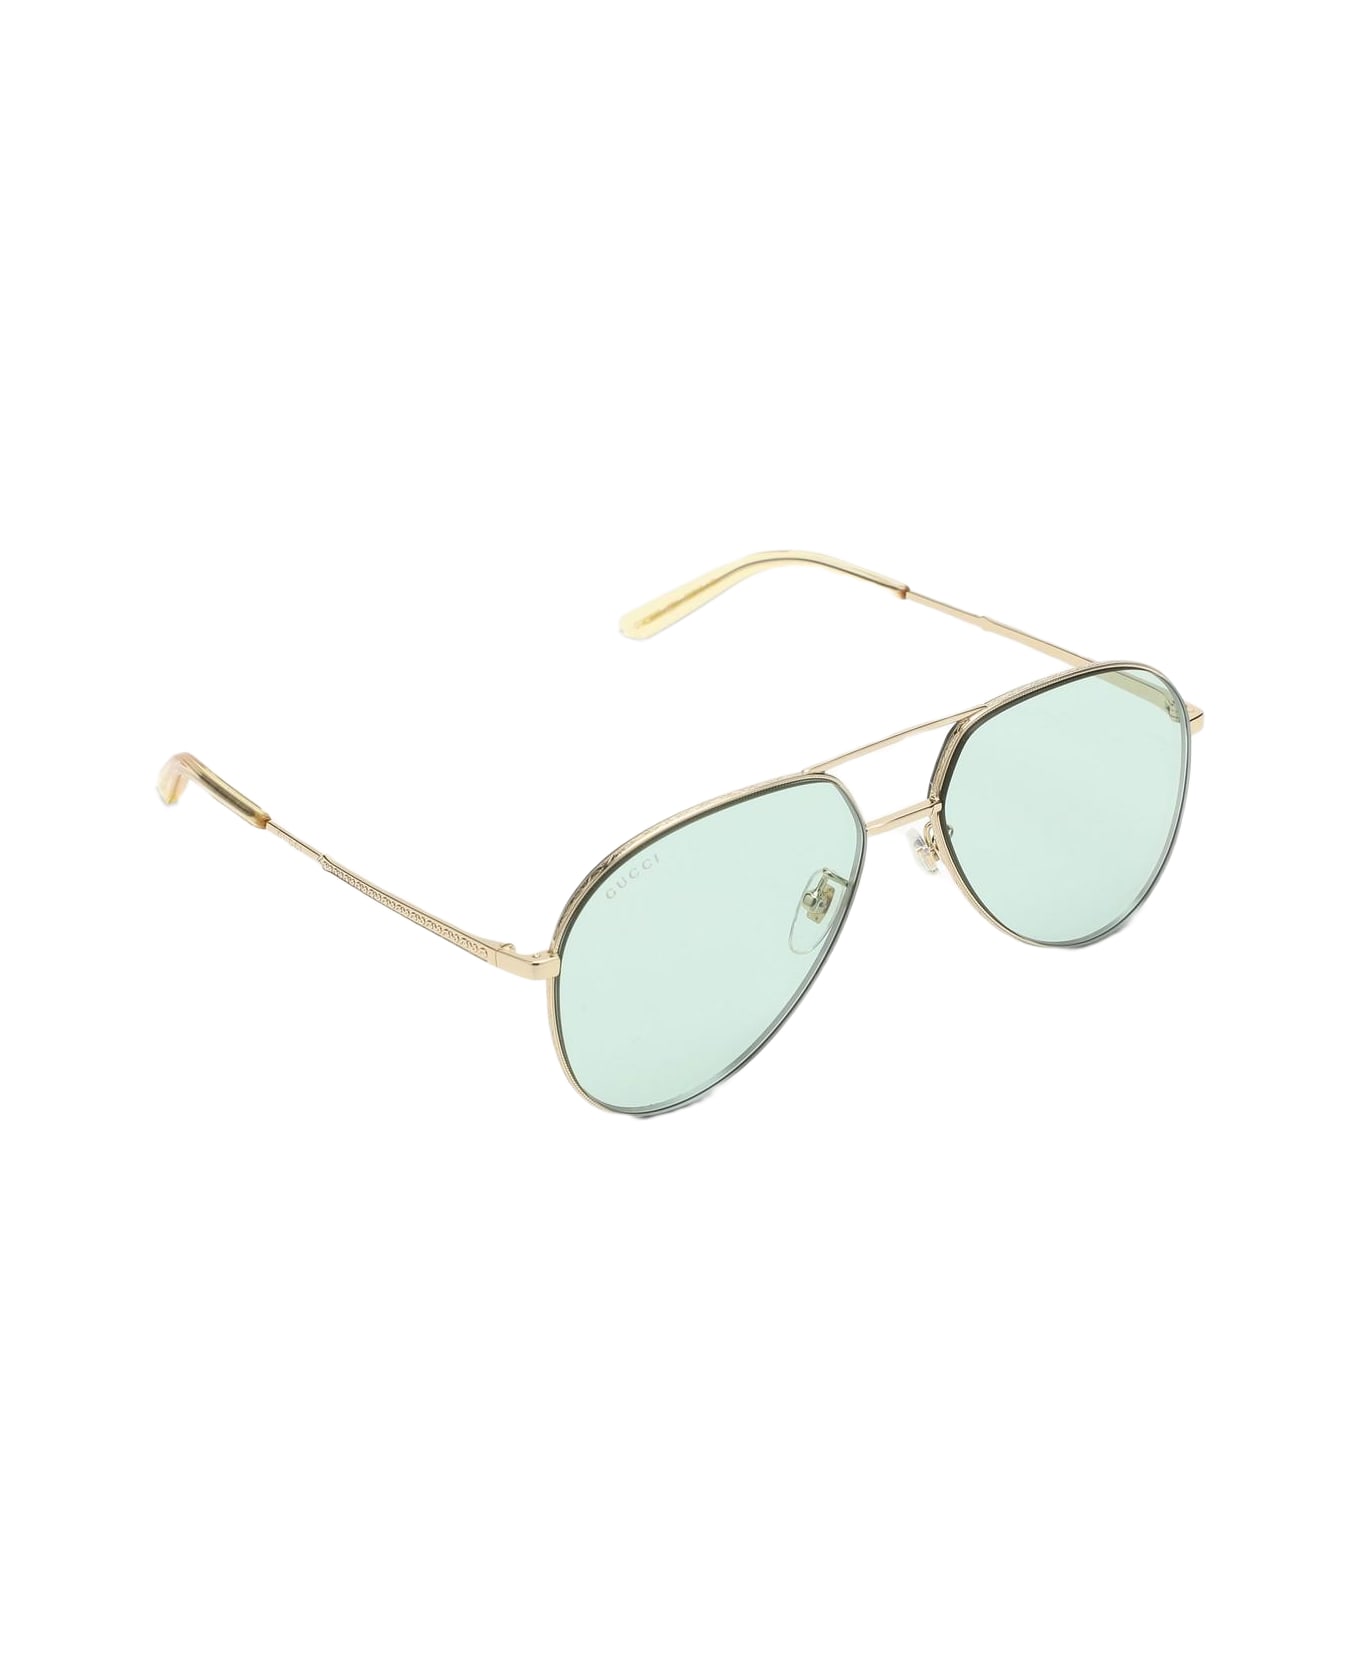 Gucci Eyewear Aviator Green Sunglasses